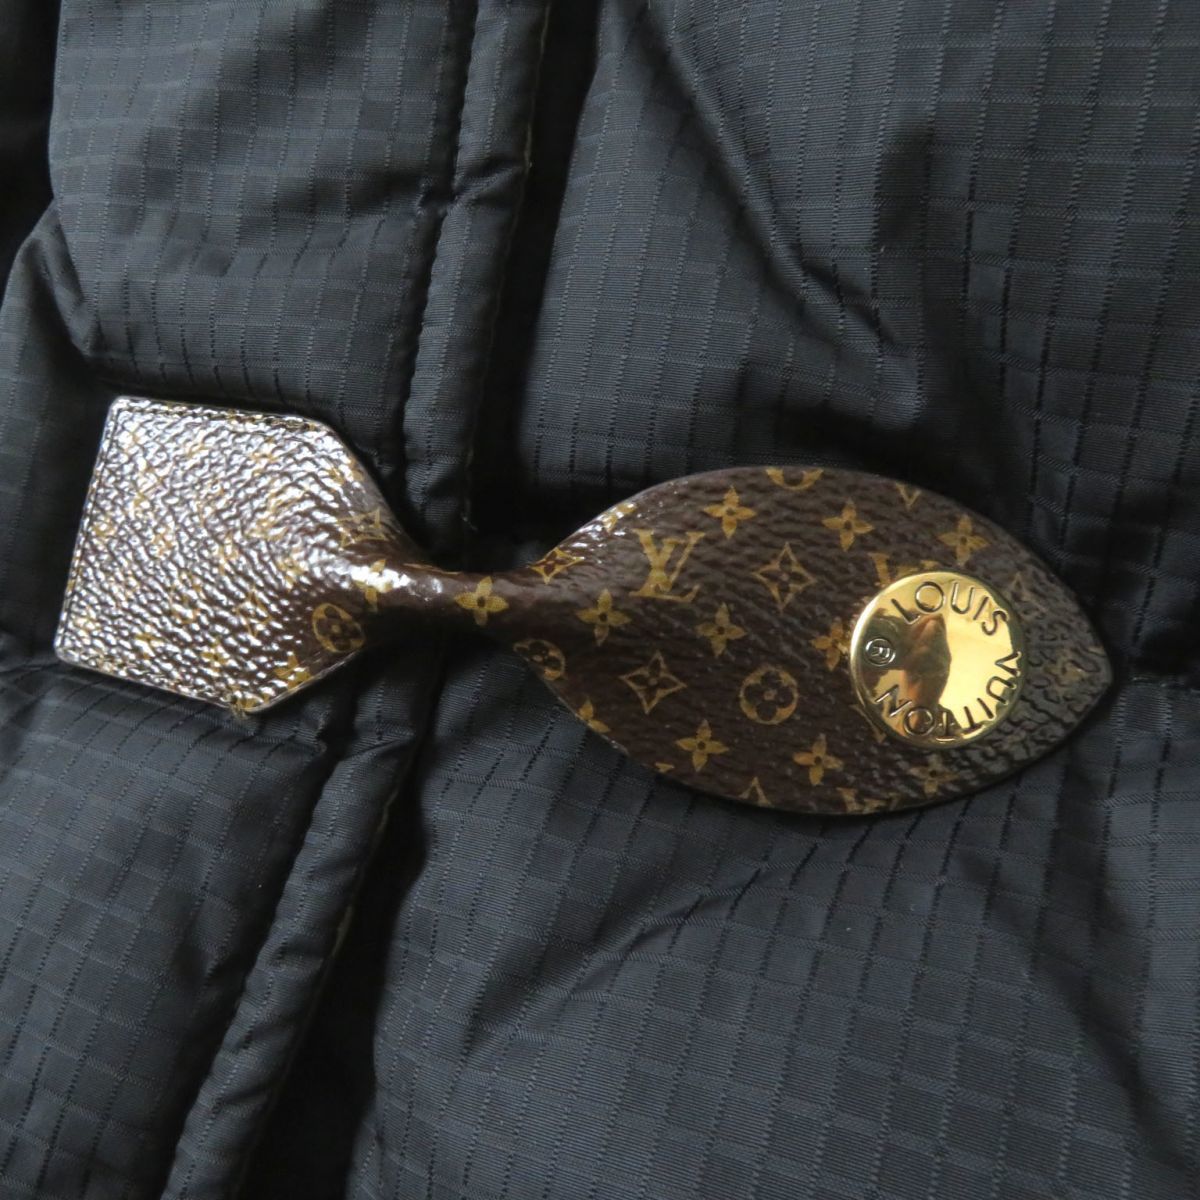  ultimate beautiful goods * regular goods 22AW regular price 480700 jpy LOUIS VUITTON Louis Vuitton monogram accent pillow u puff . jacket / down jacket black 36